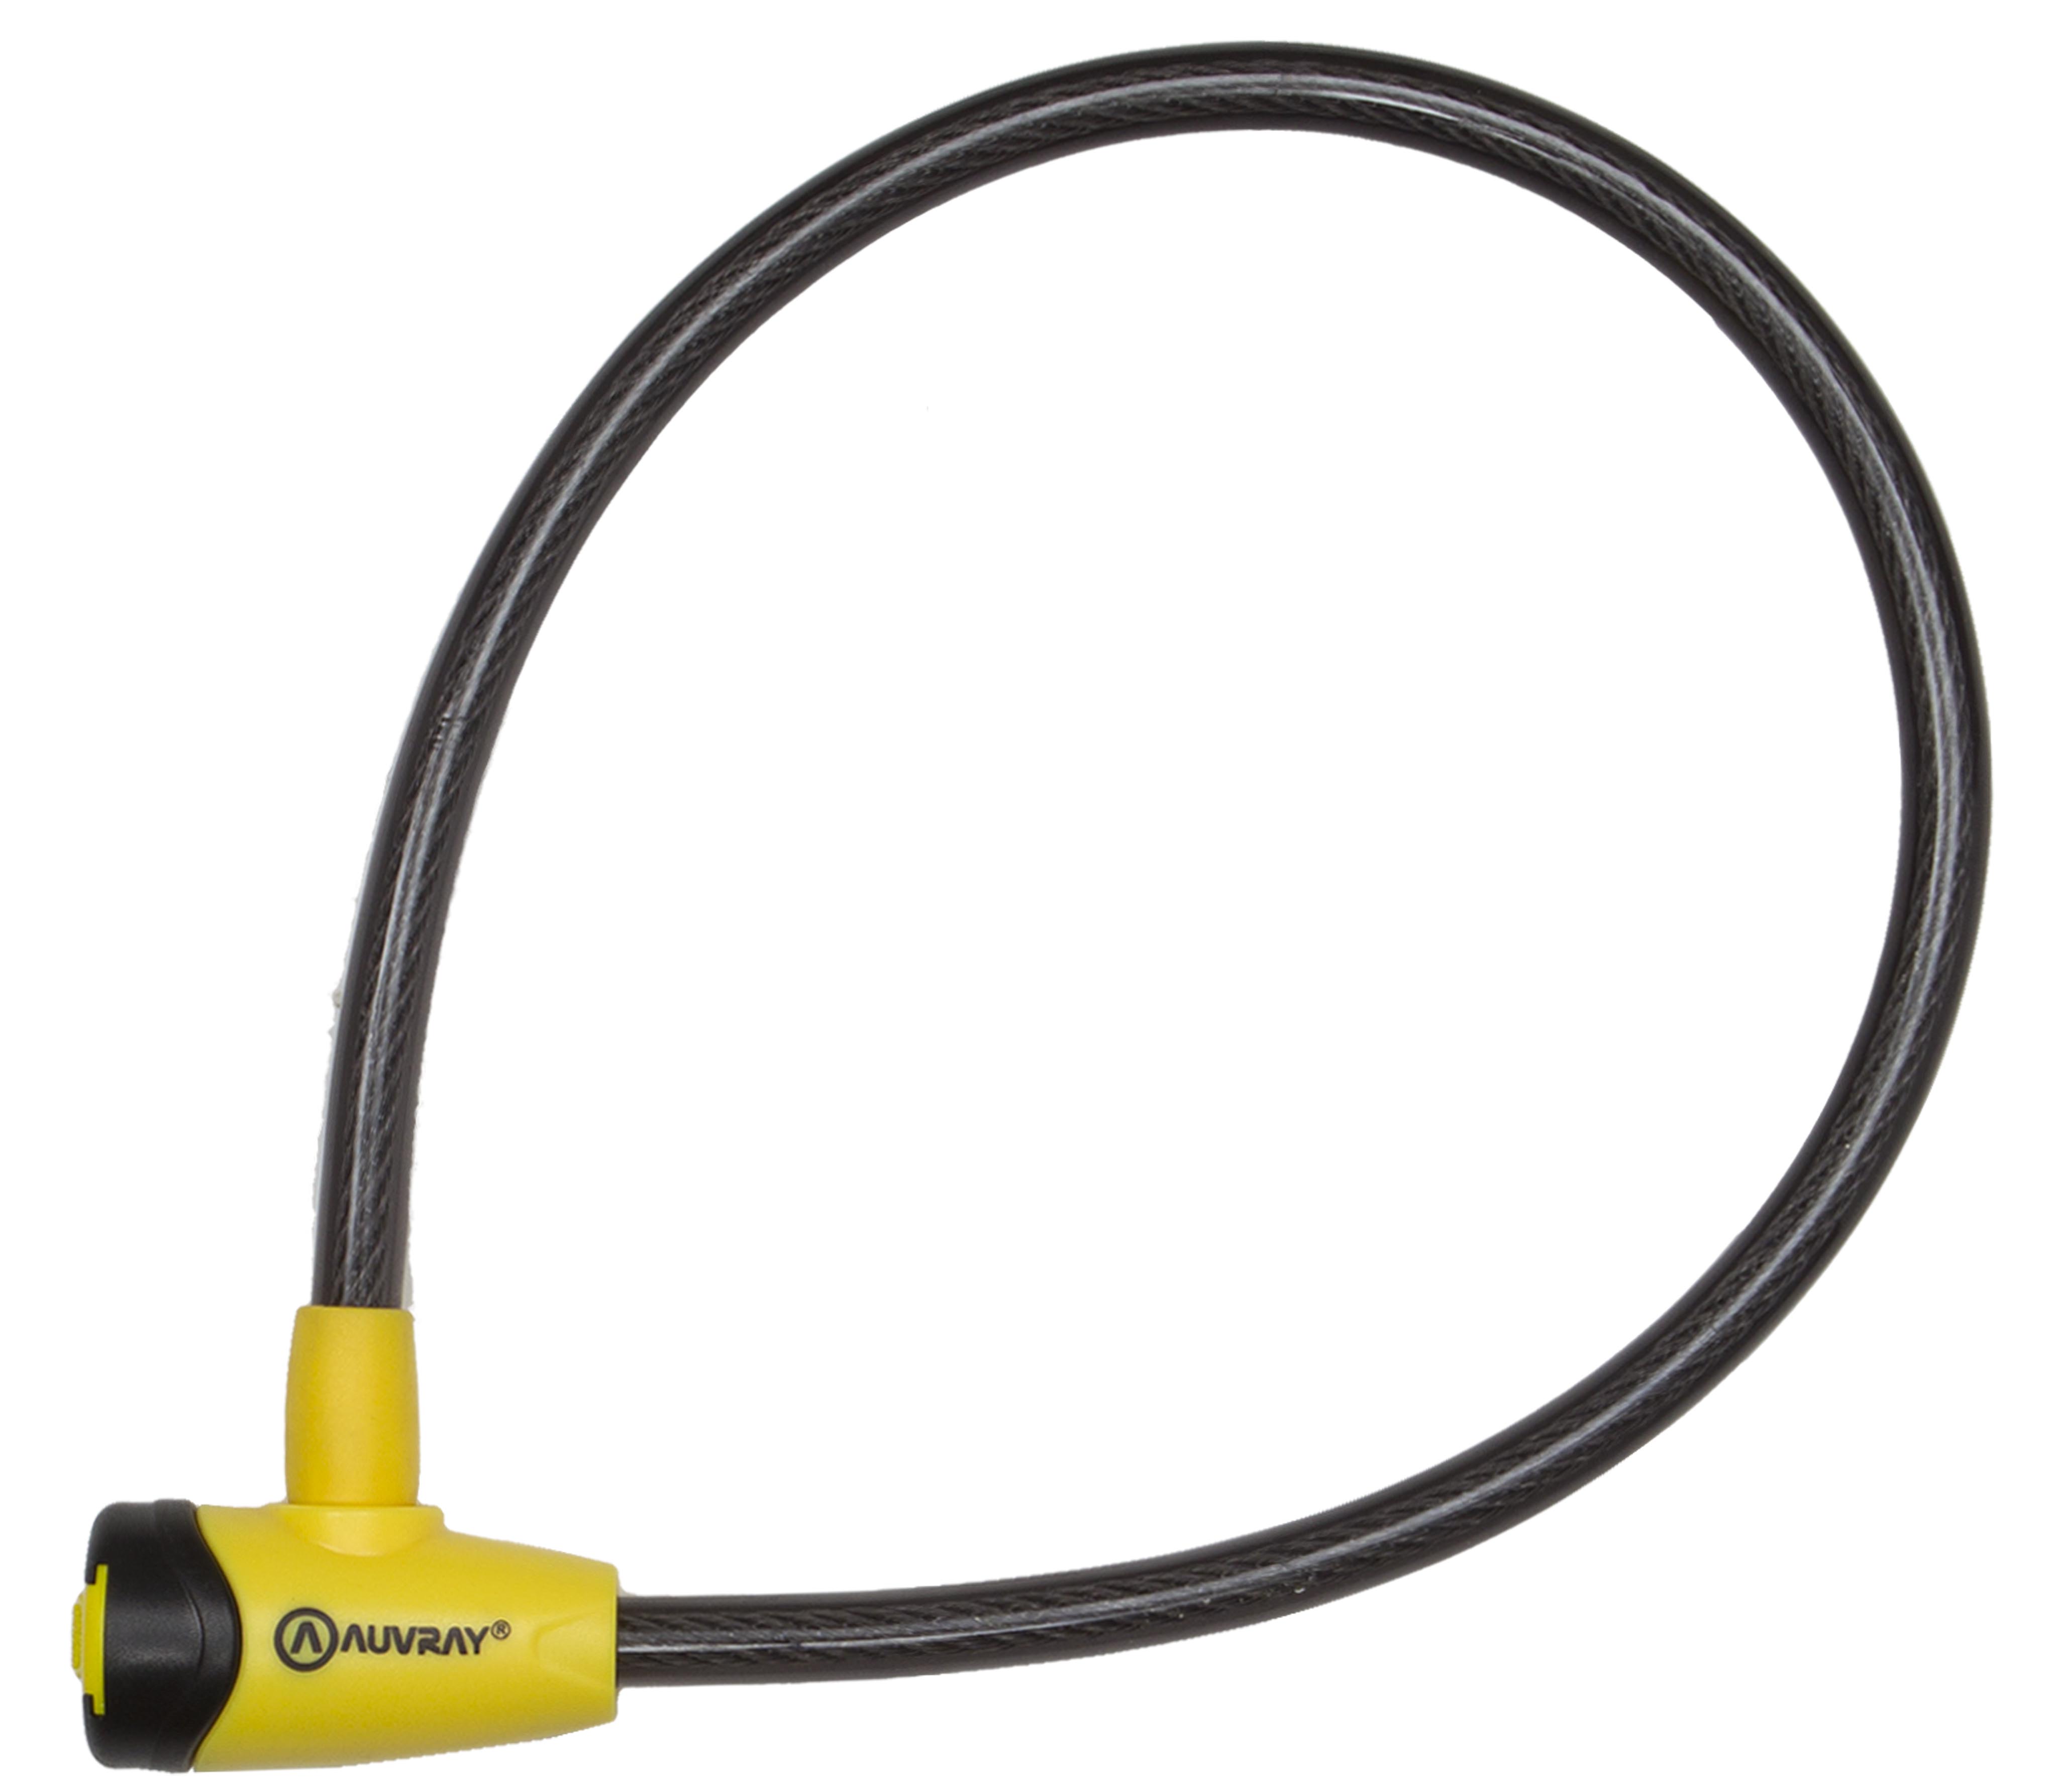 Antirrobo Auvray Cable Con Llave D.12 En 65 Cm - amarillo-negro - 